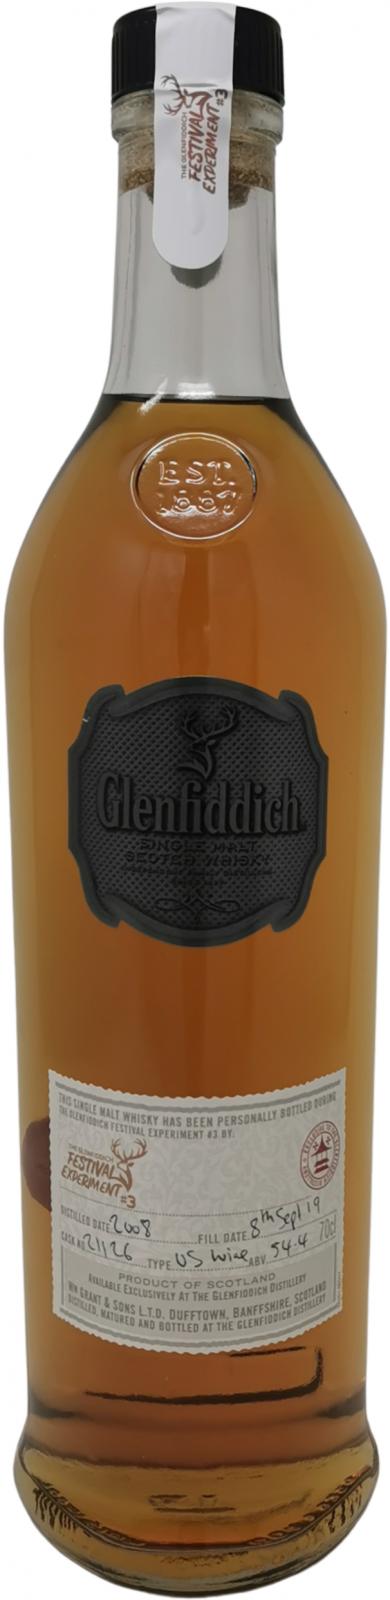 Glenfiddich 2008 US Wine #21126 54.4% 700ml